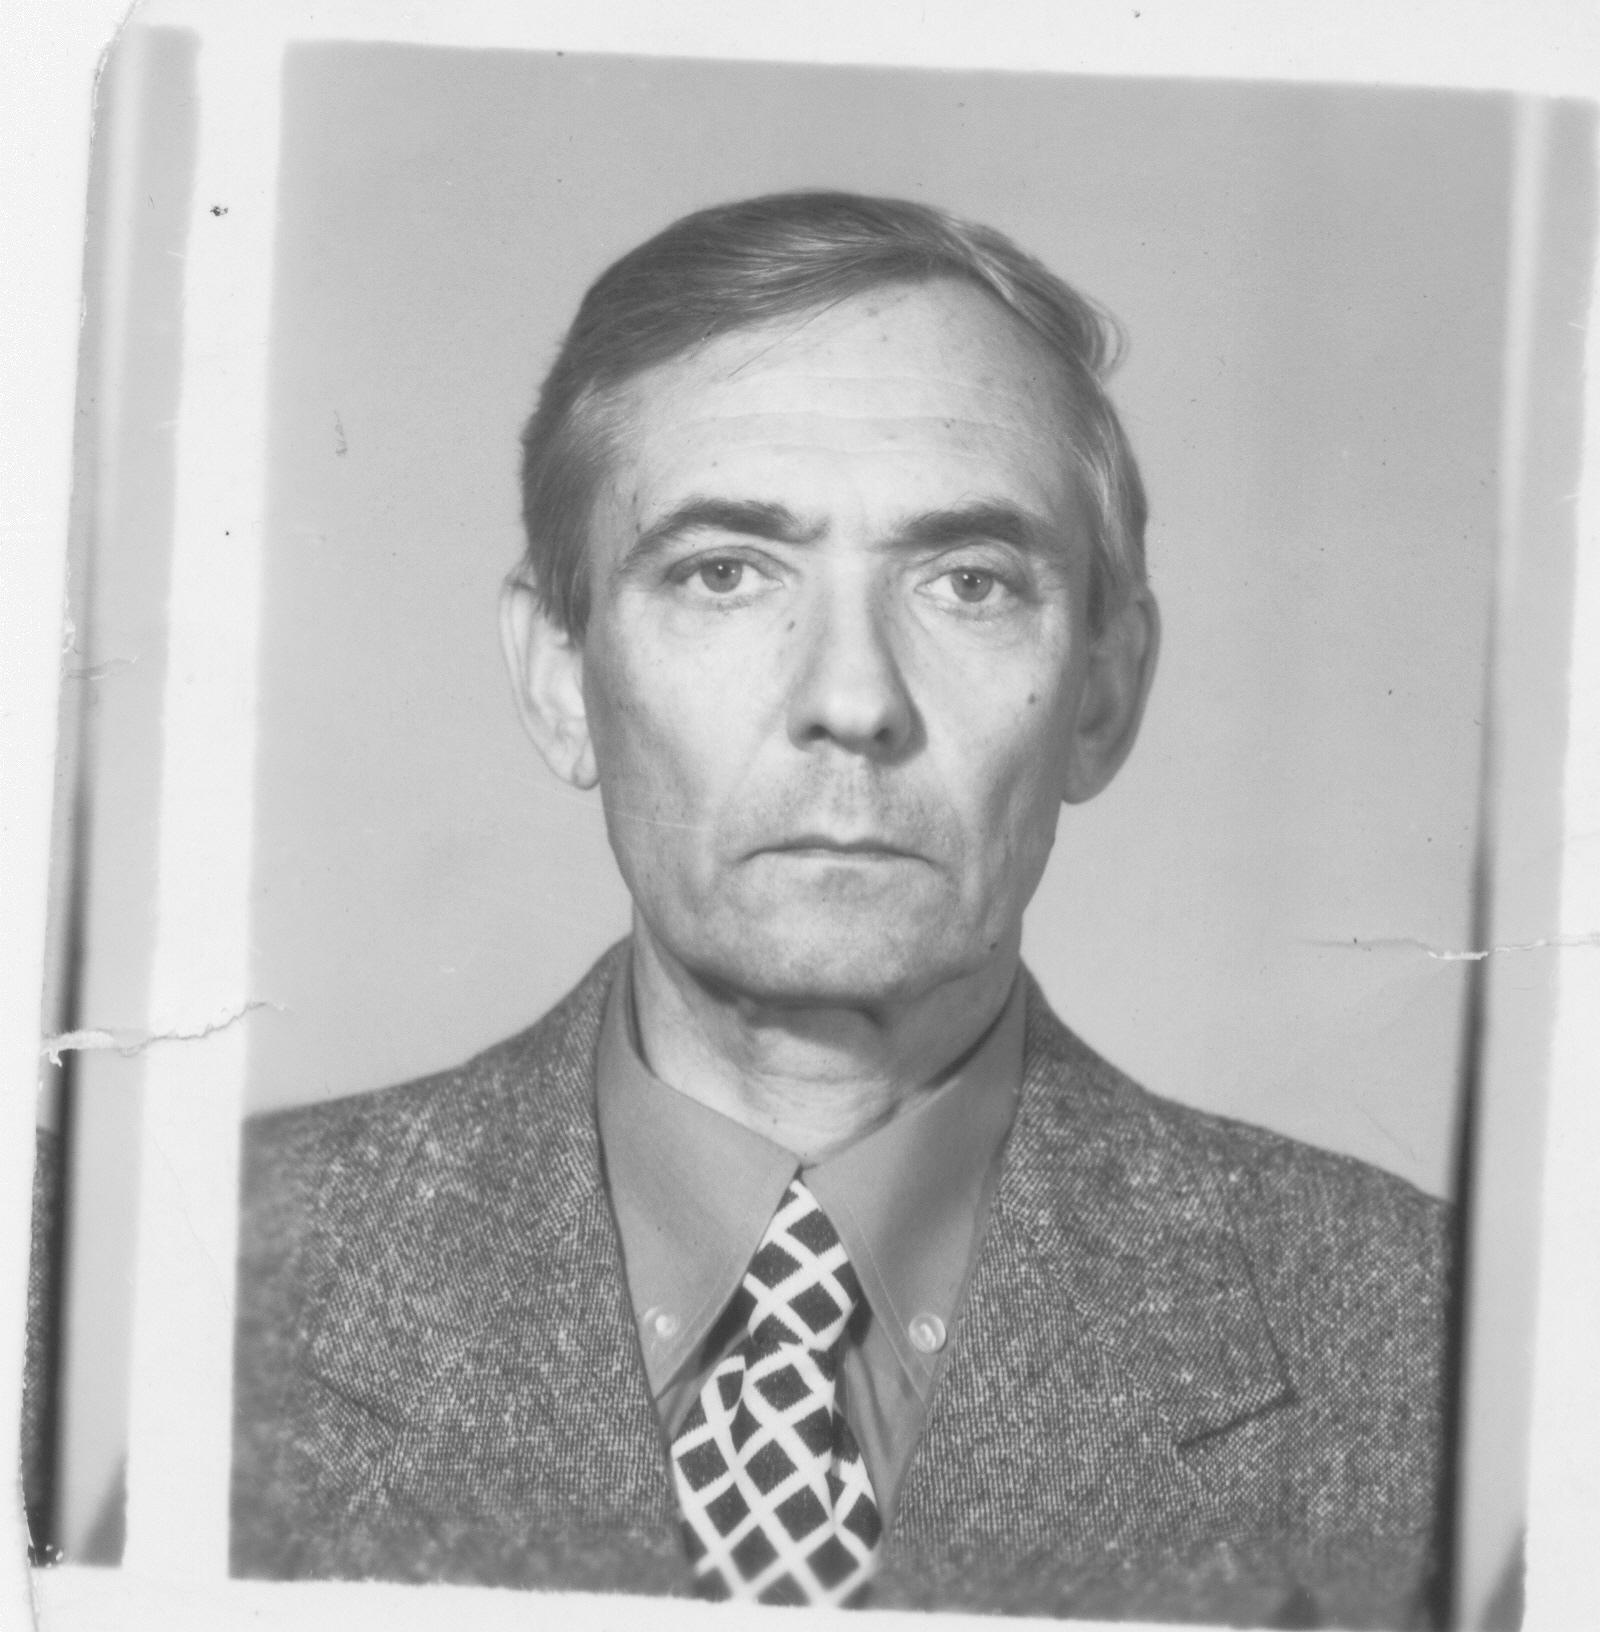  Сентябрь 1981 г., фотография на паспорт